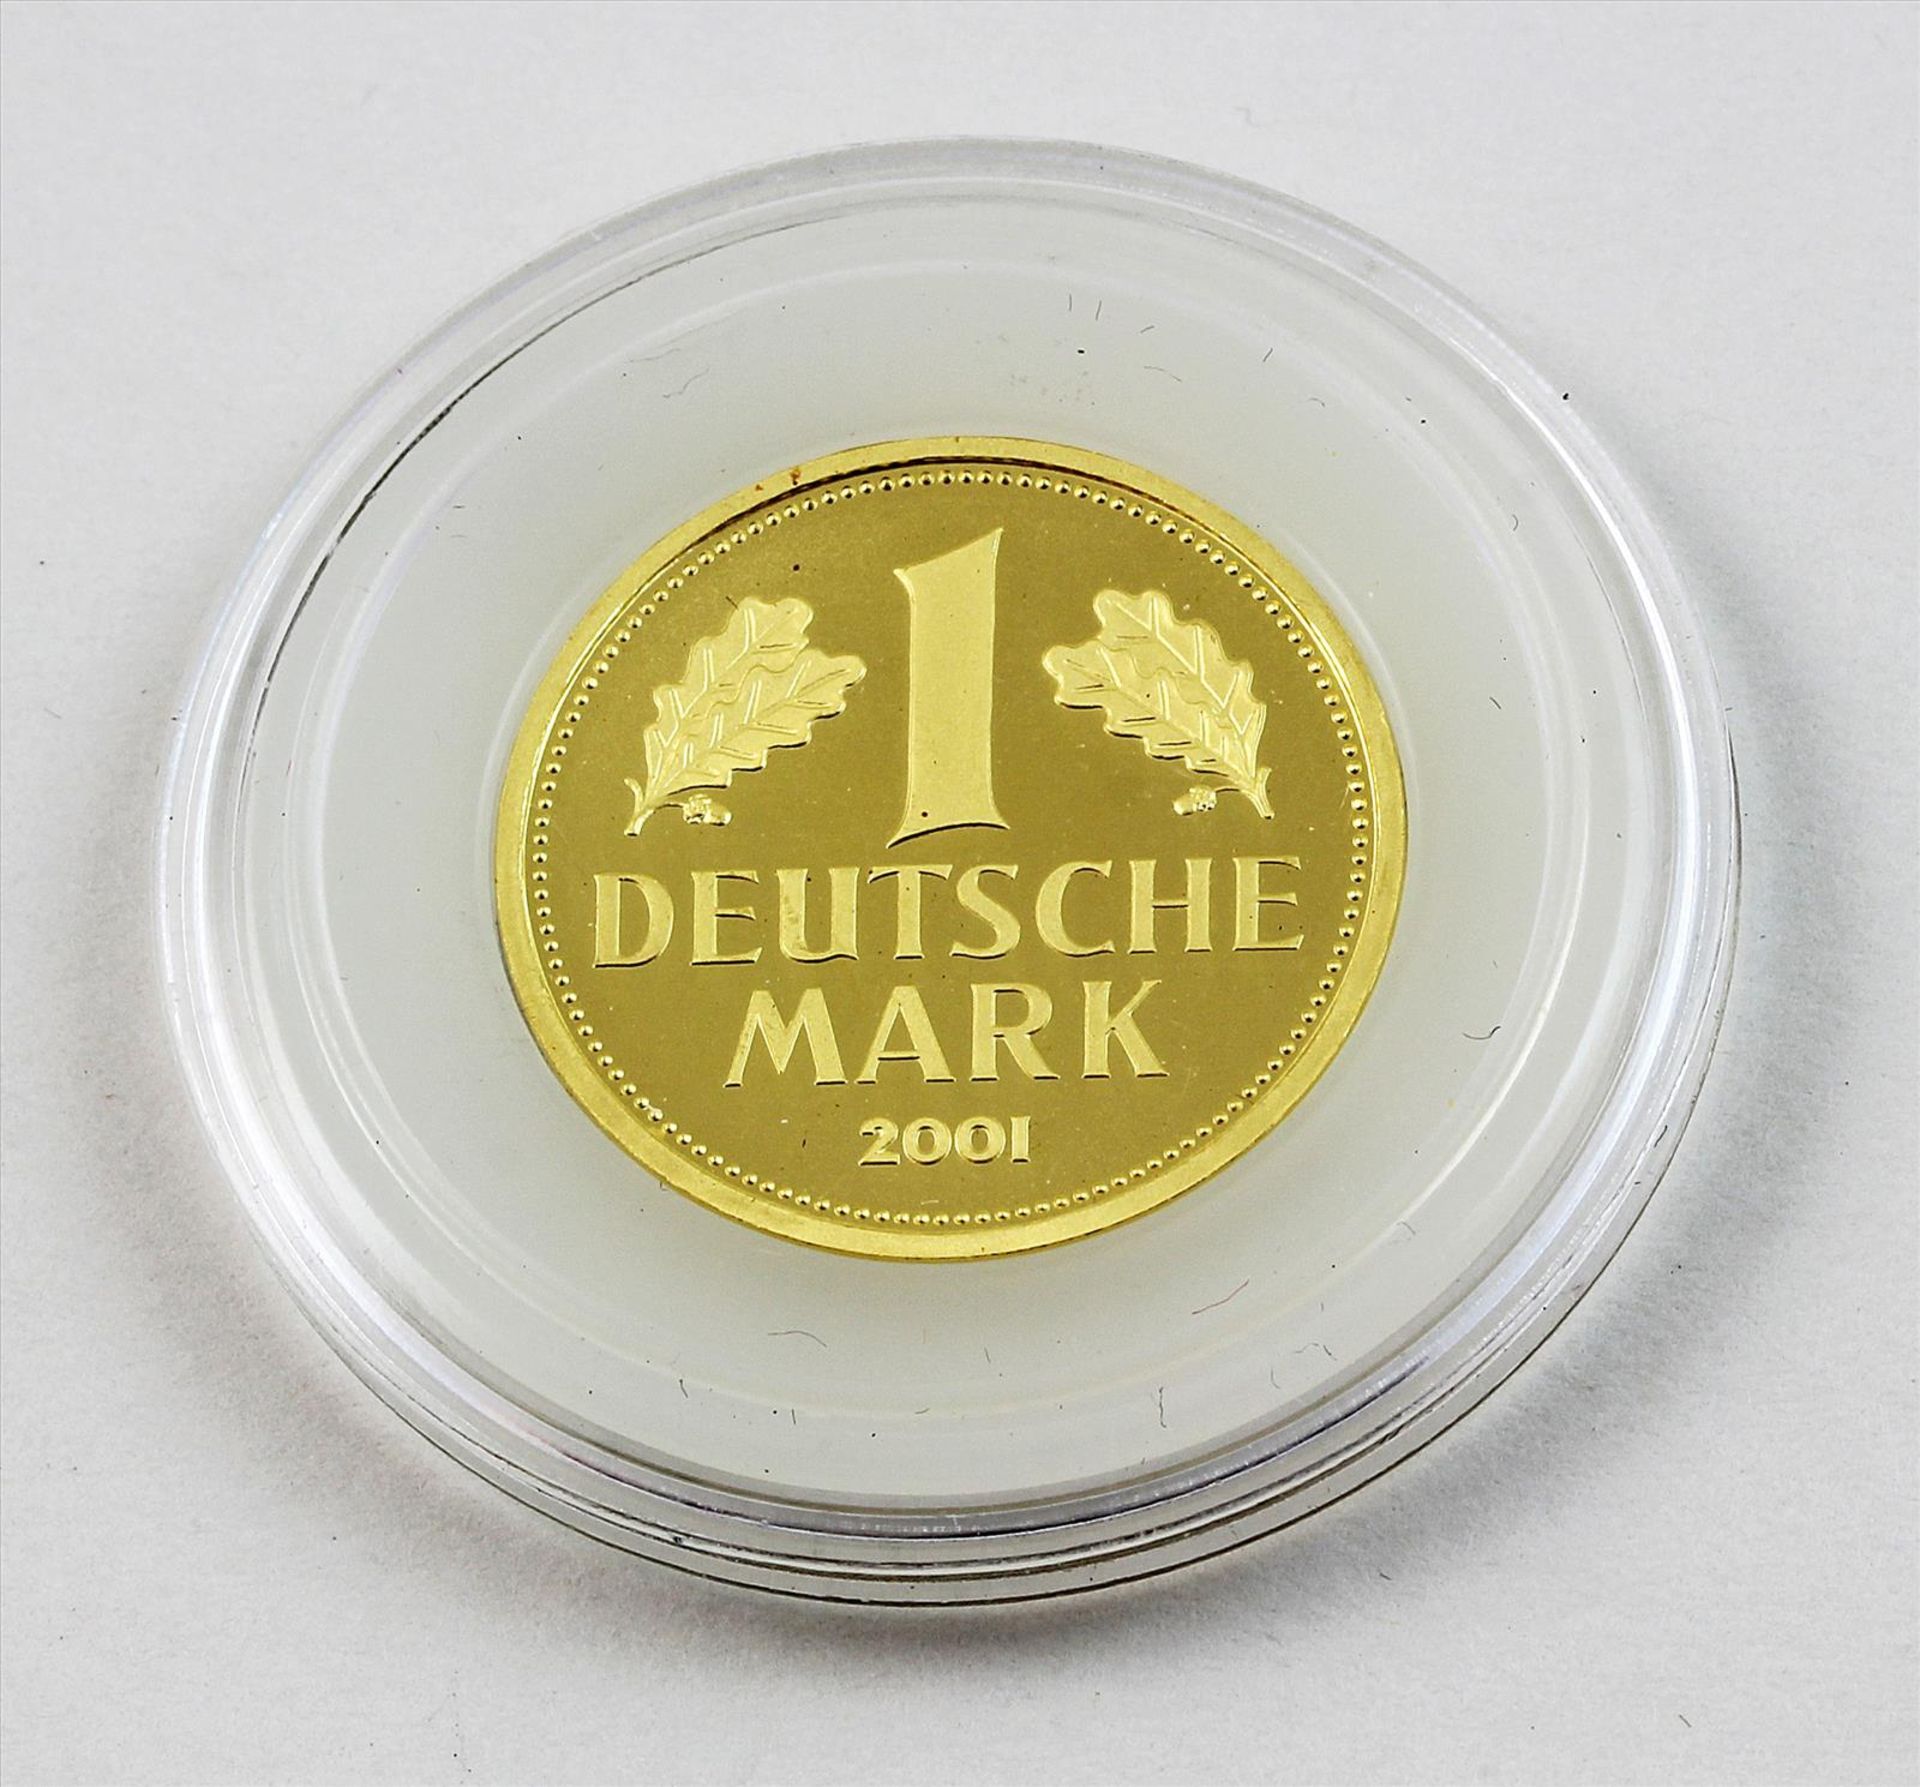 Goldmünze Deutschland, 1 DM, Jahrgang 2001.999/000 Feingold, 12 g. In Kapsel.